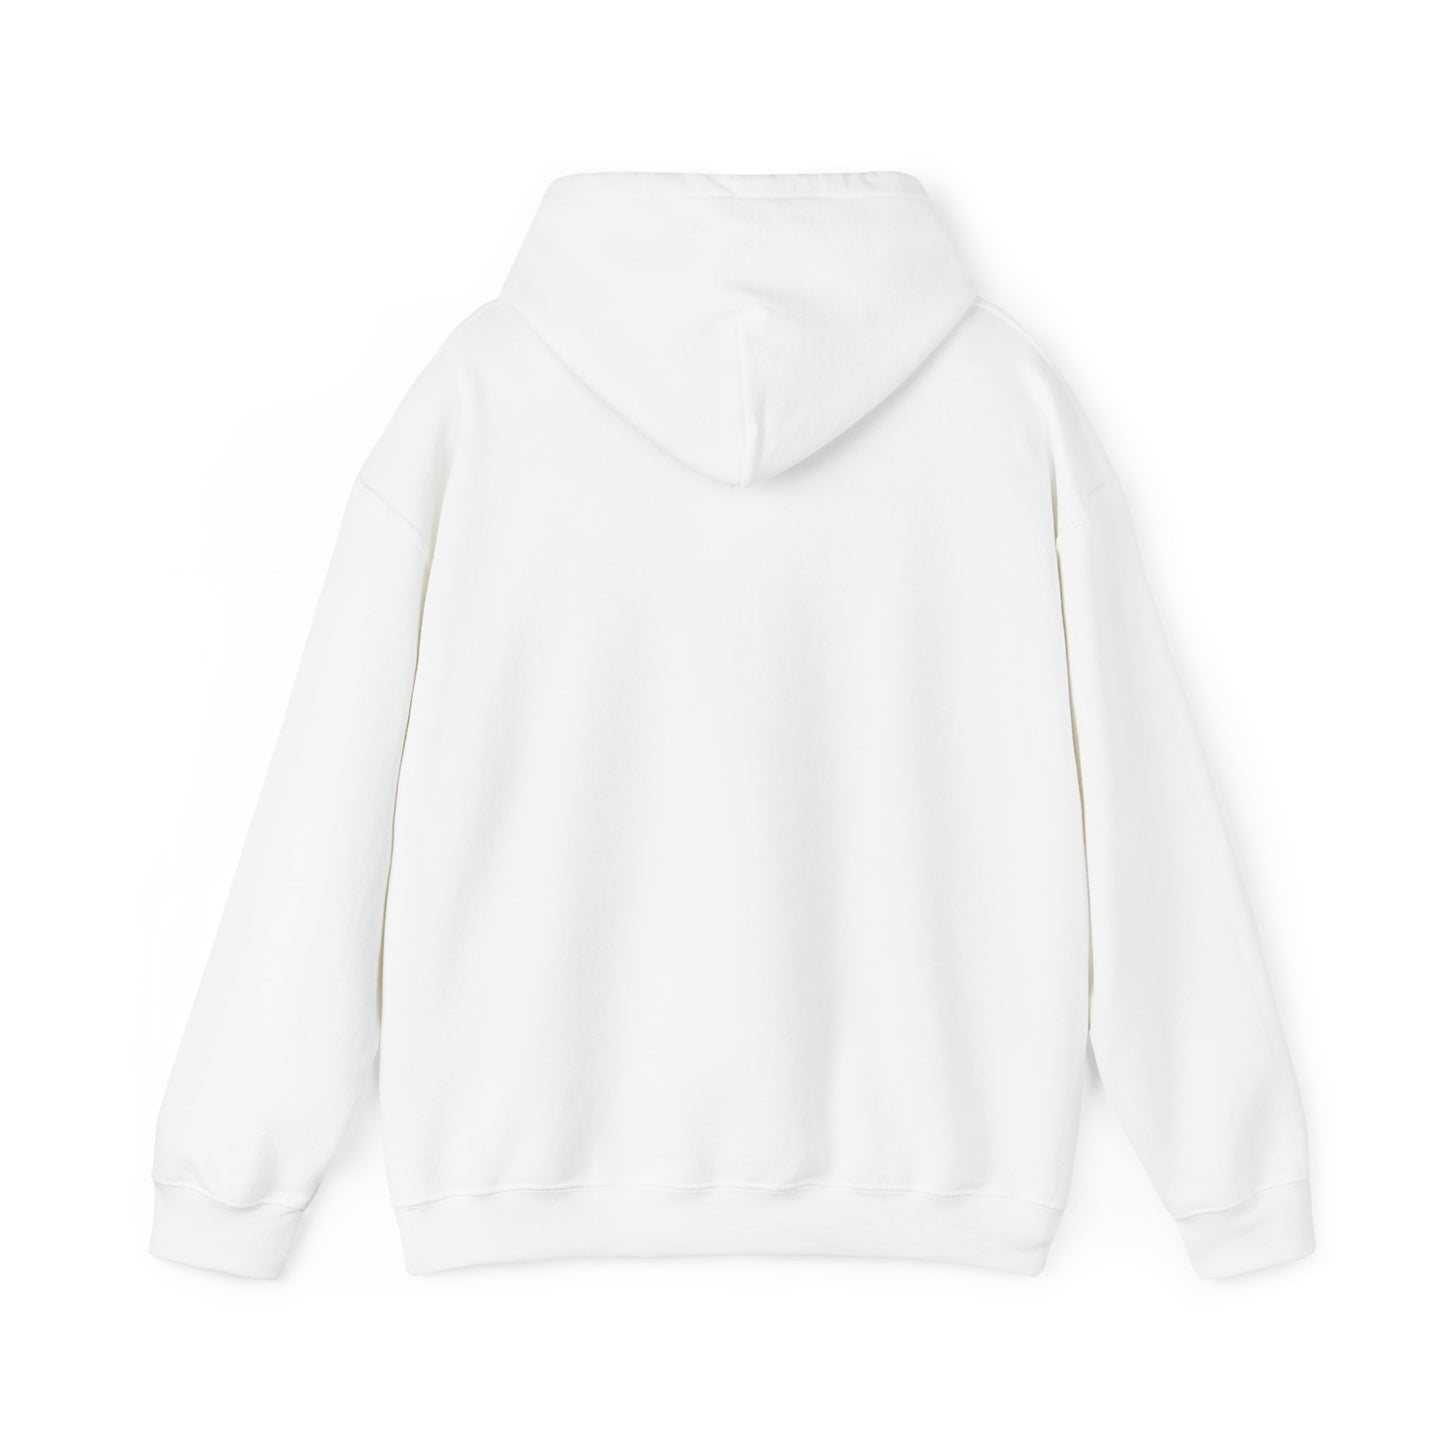 Love More Unisex Heavy Blend™ Hooded Sweatshirt